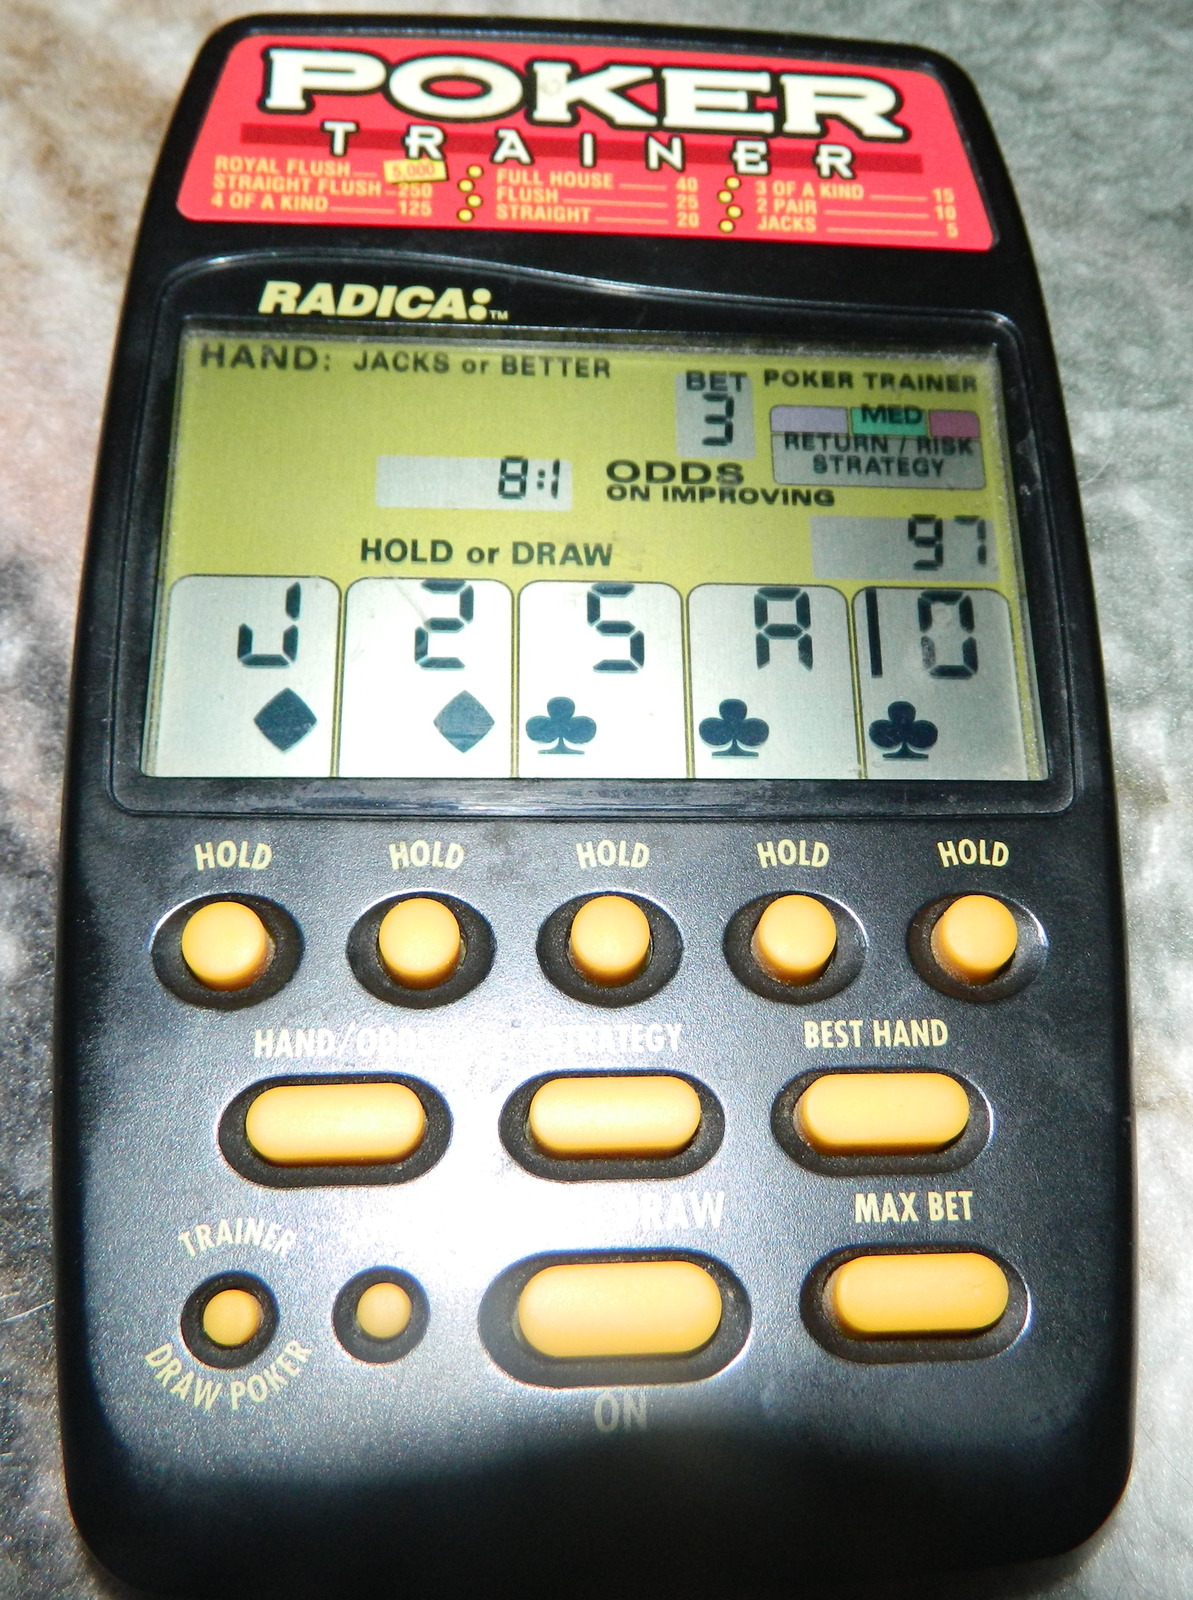 Radica Electronic Game: 1 customer 